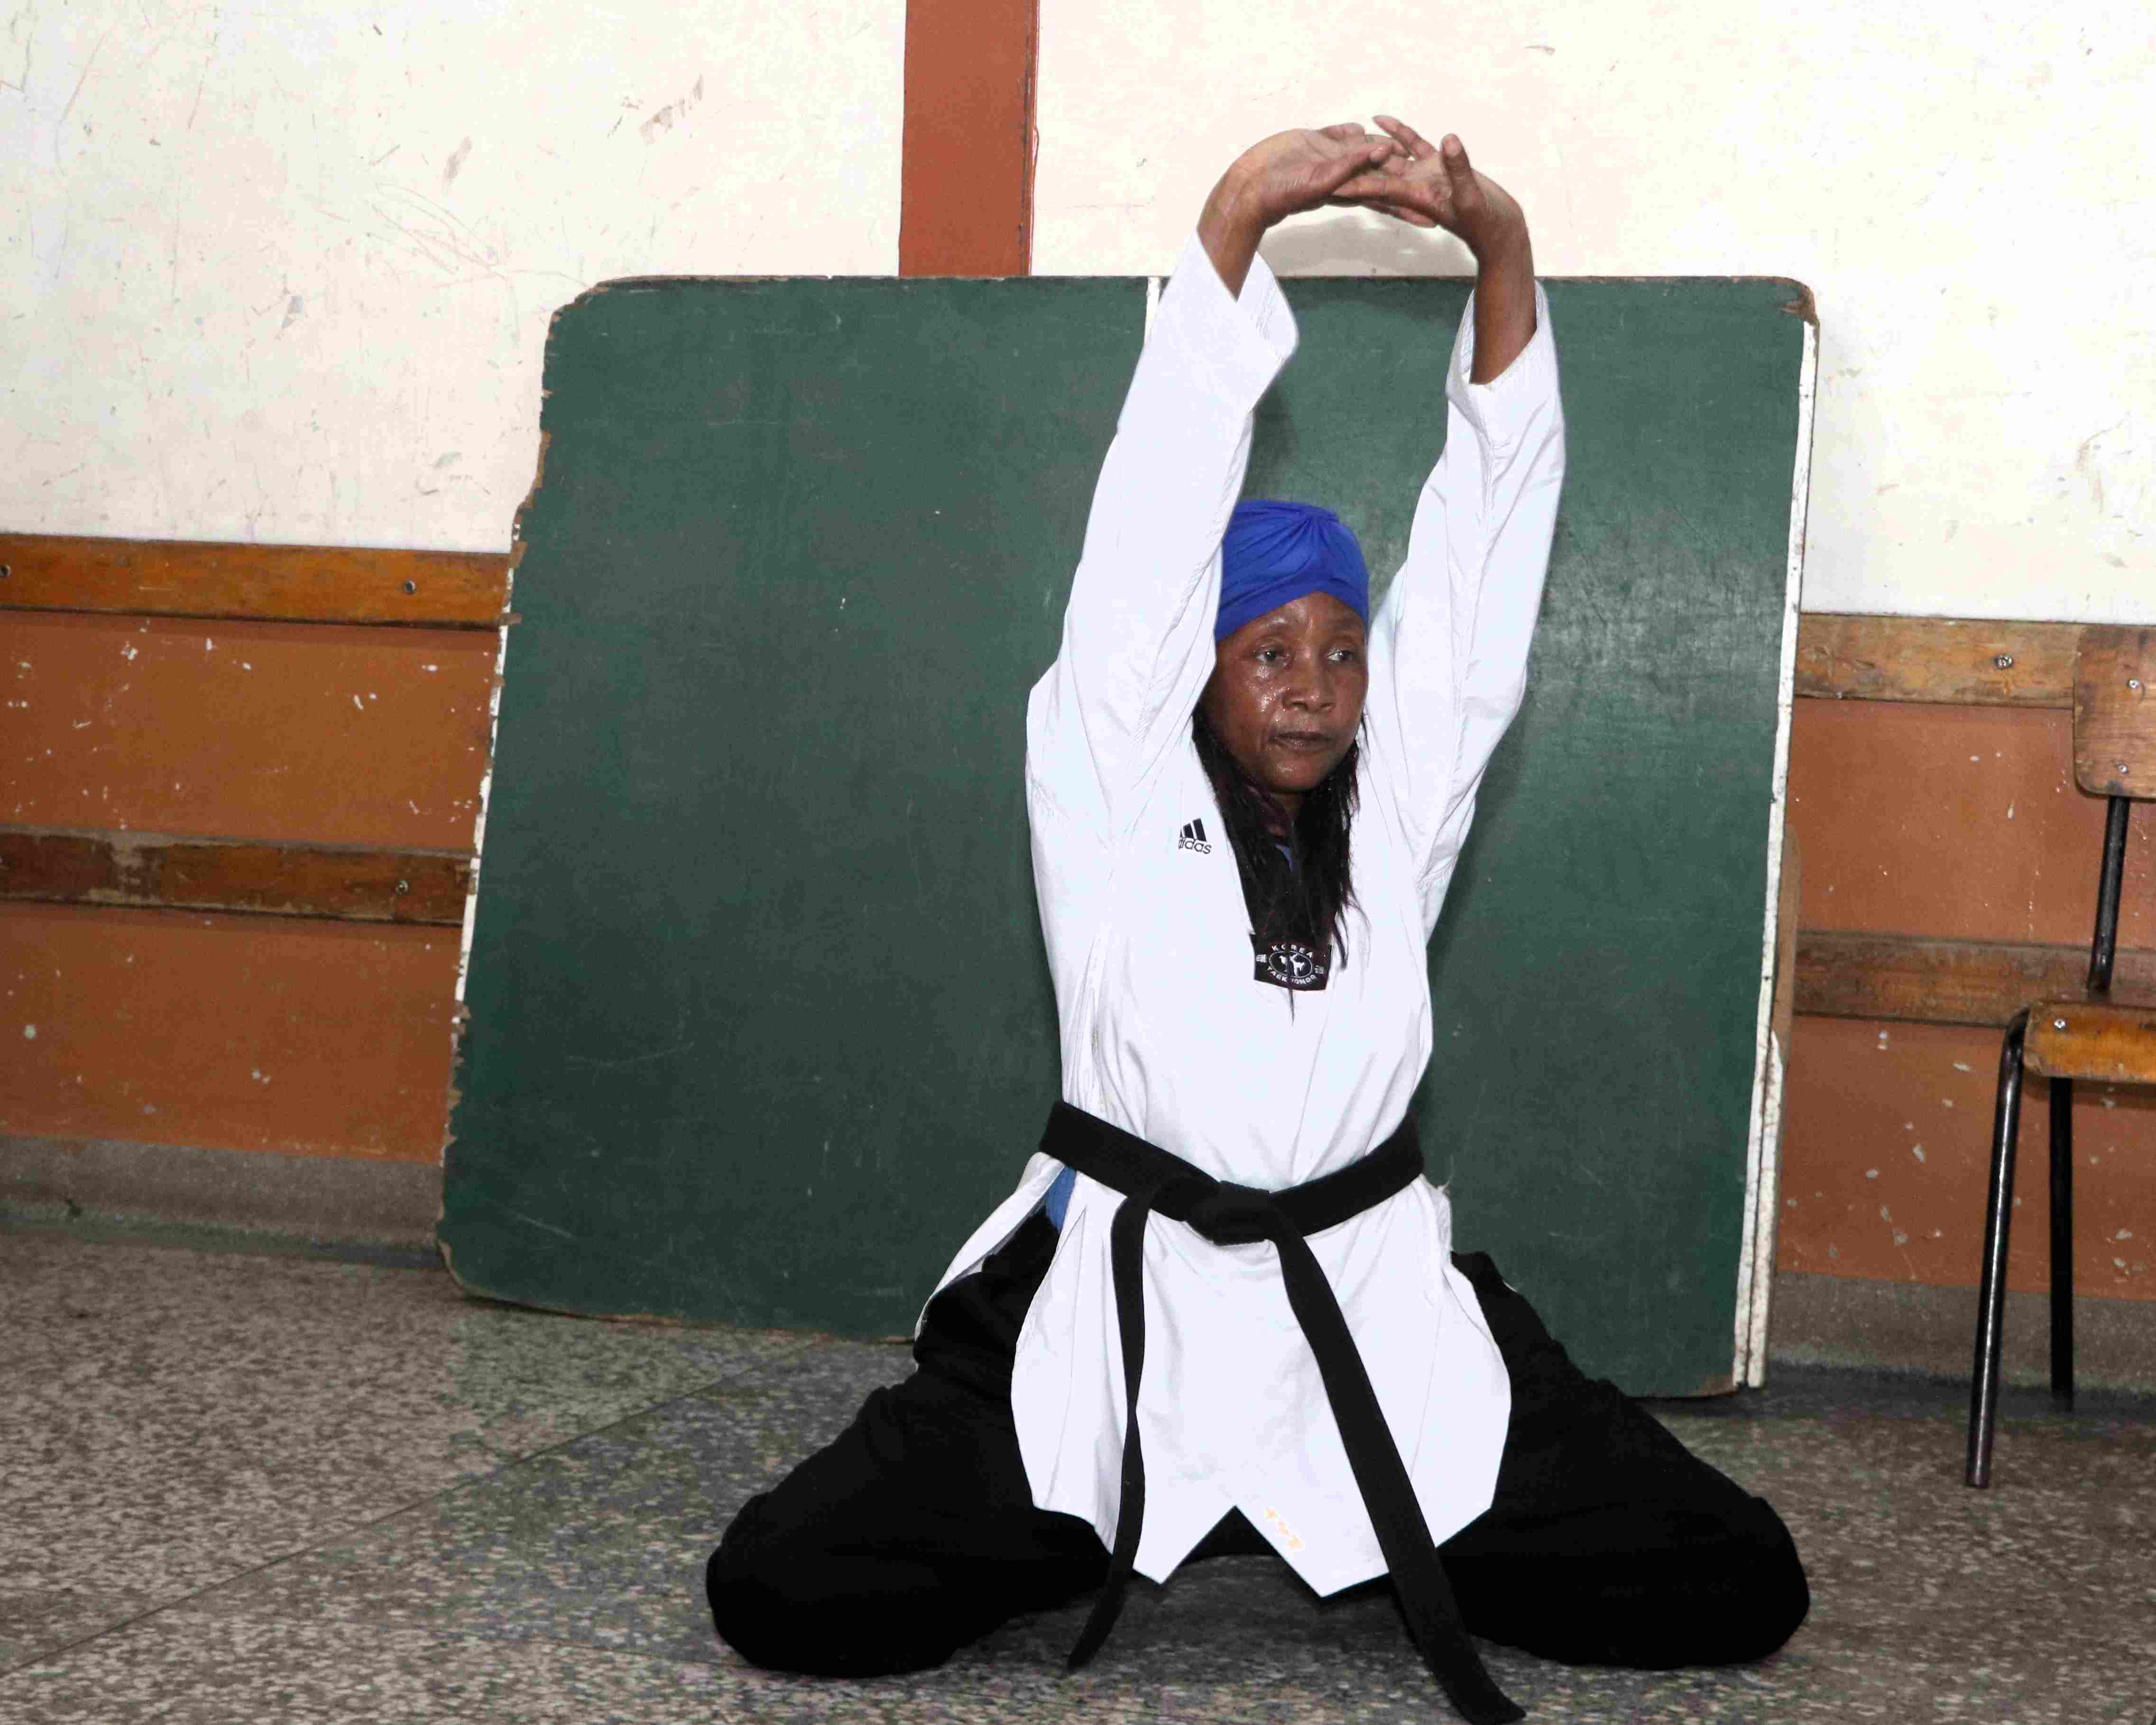 Eastleigh female taekwondo coach empowers youth a kick at a time